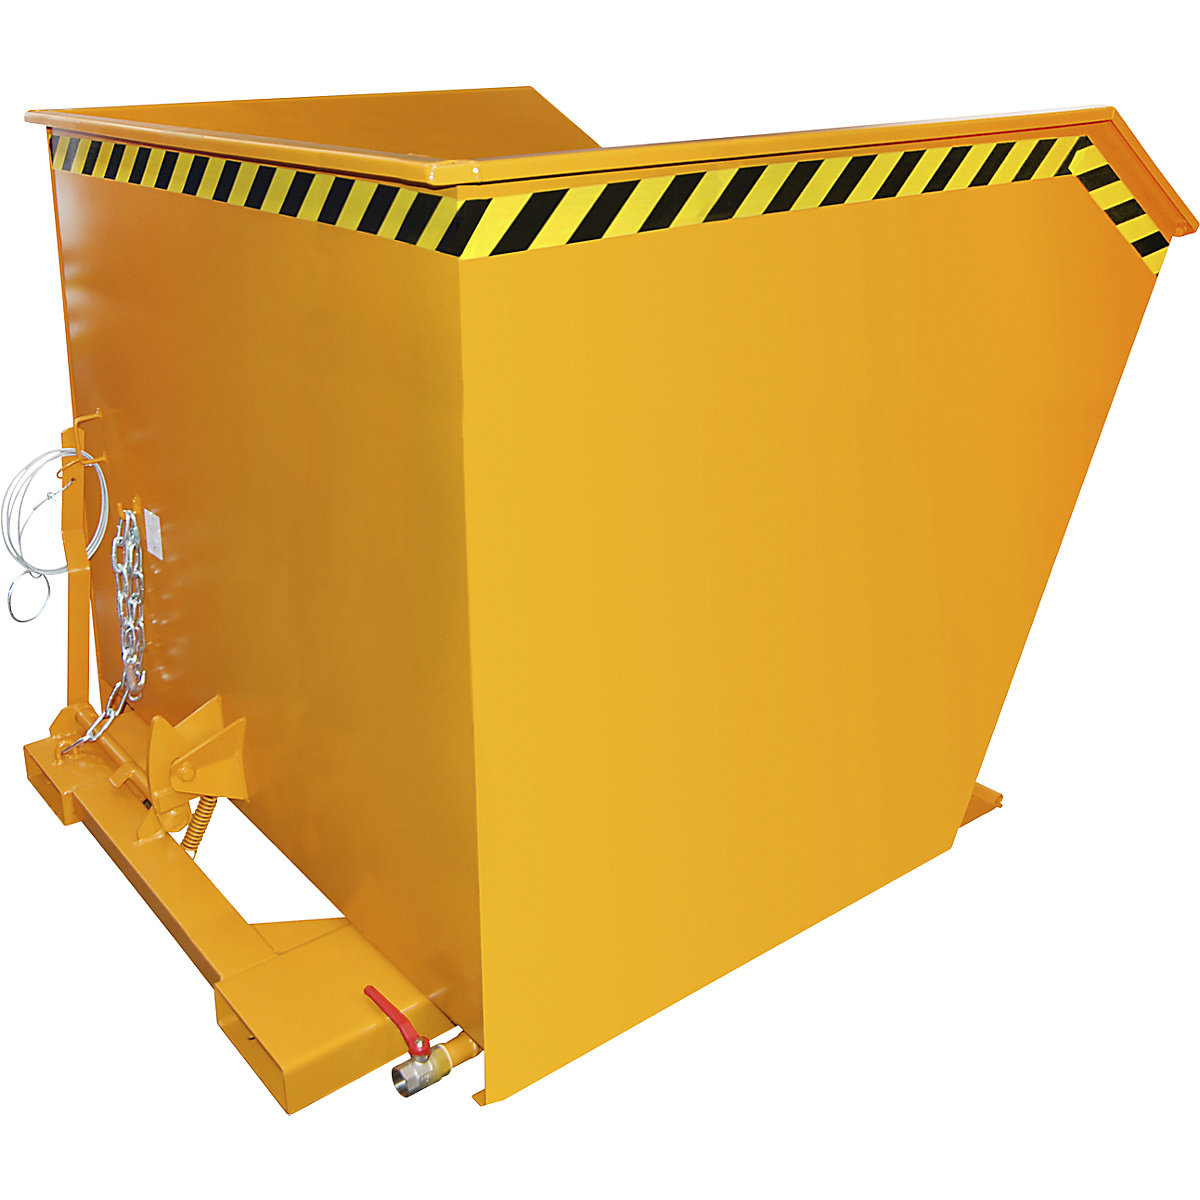 SGU skip for metal swarf – eurokraft pro, capacity 2 m³, yellow orange-4